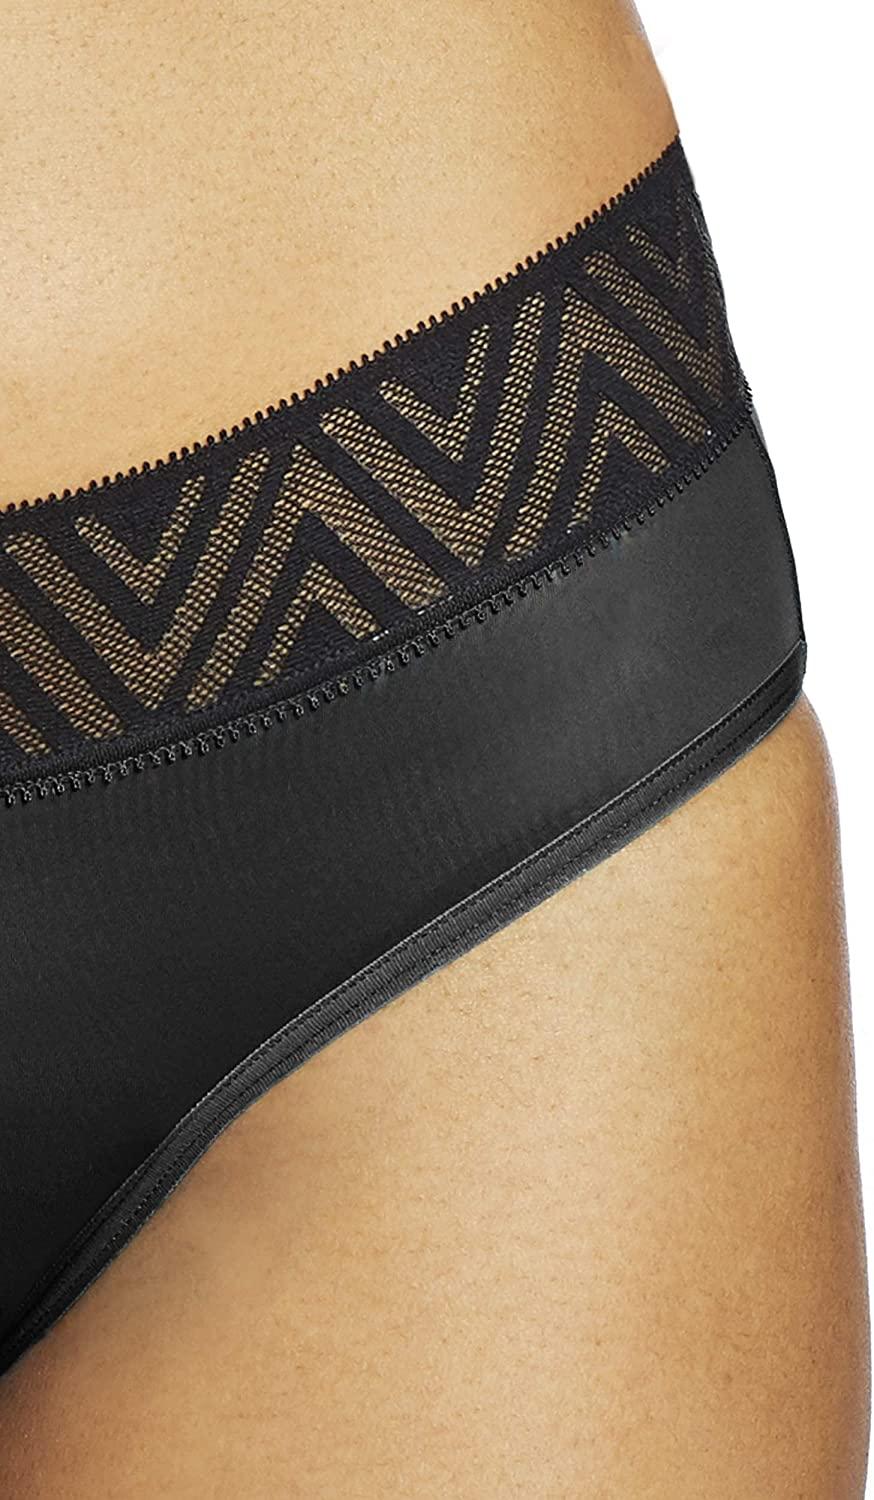 Thinx for All Women's Super Absorbency Bikini Period Underwear Gray Size XL